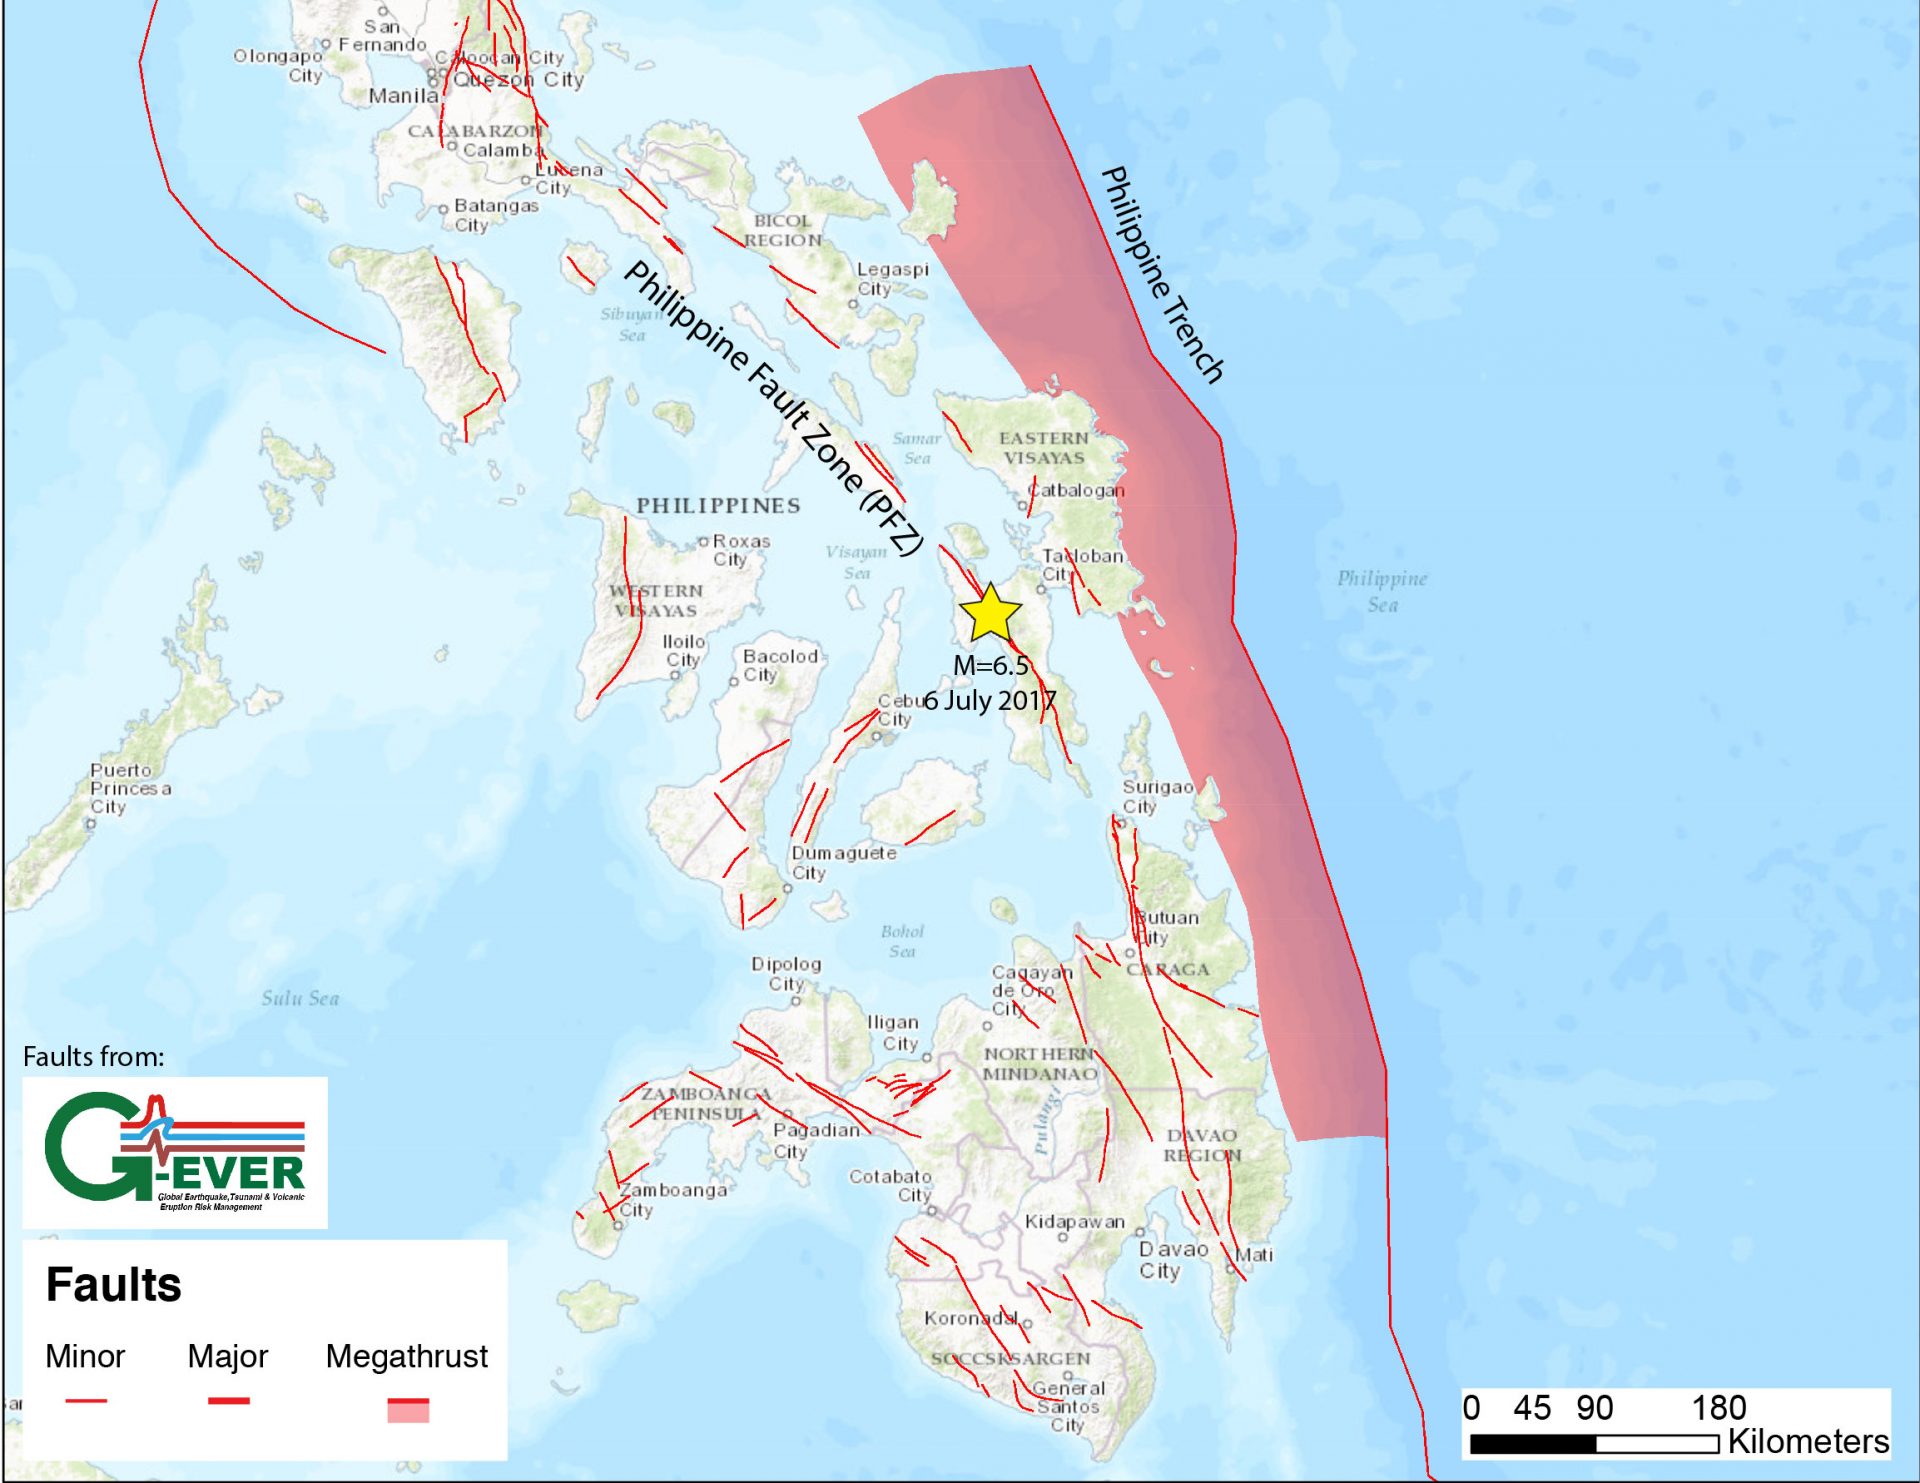 photo illustration of Philippine fault zone map